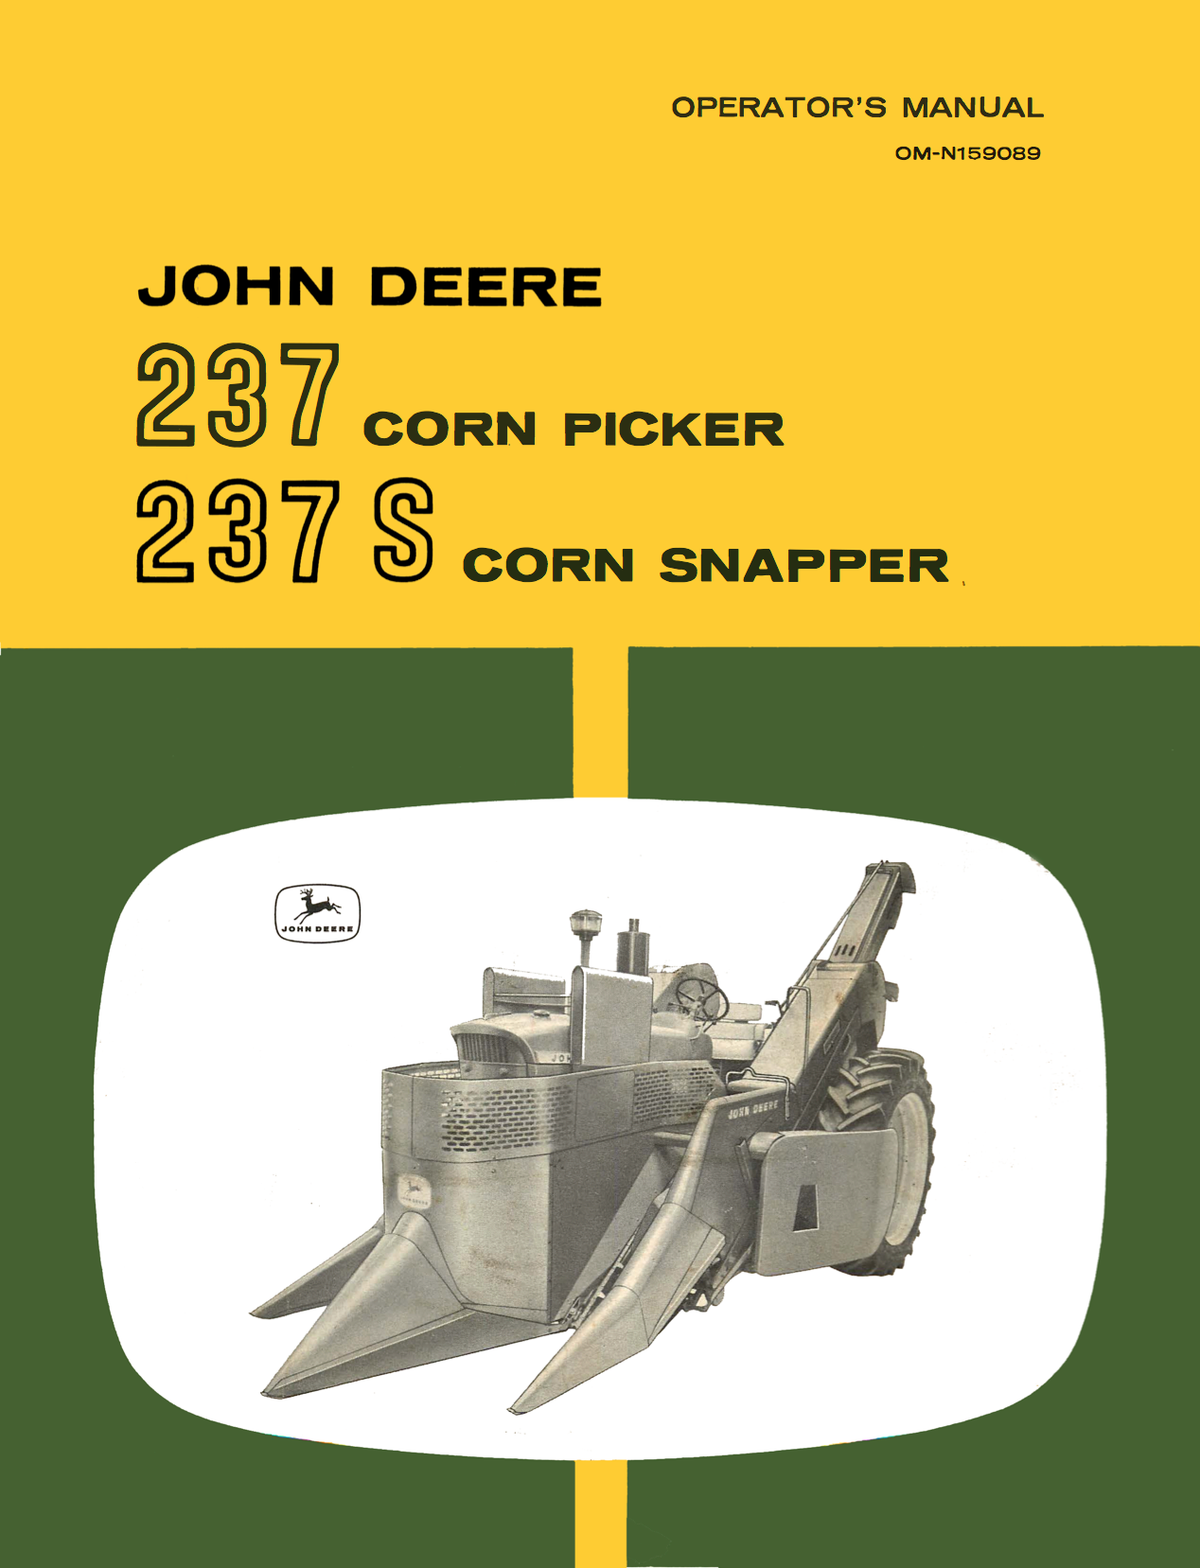 John Deere 237 Corn Picker 237 S Corn Snapper - Operator's Manual - Ag Manuals - A Provider of Digital Farm Manuals - 1